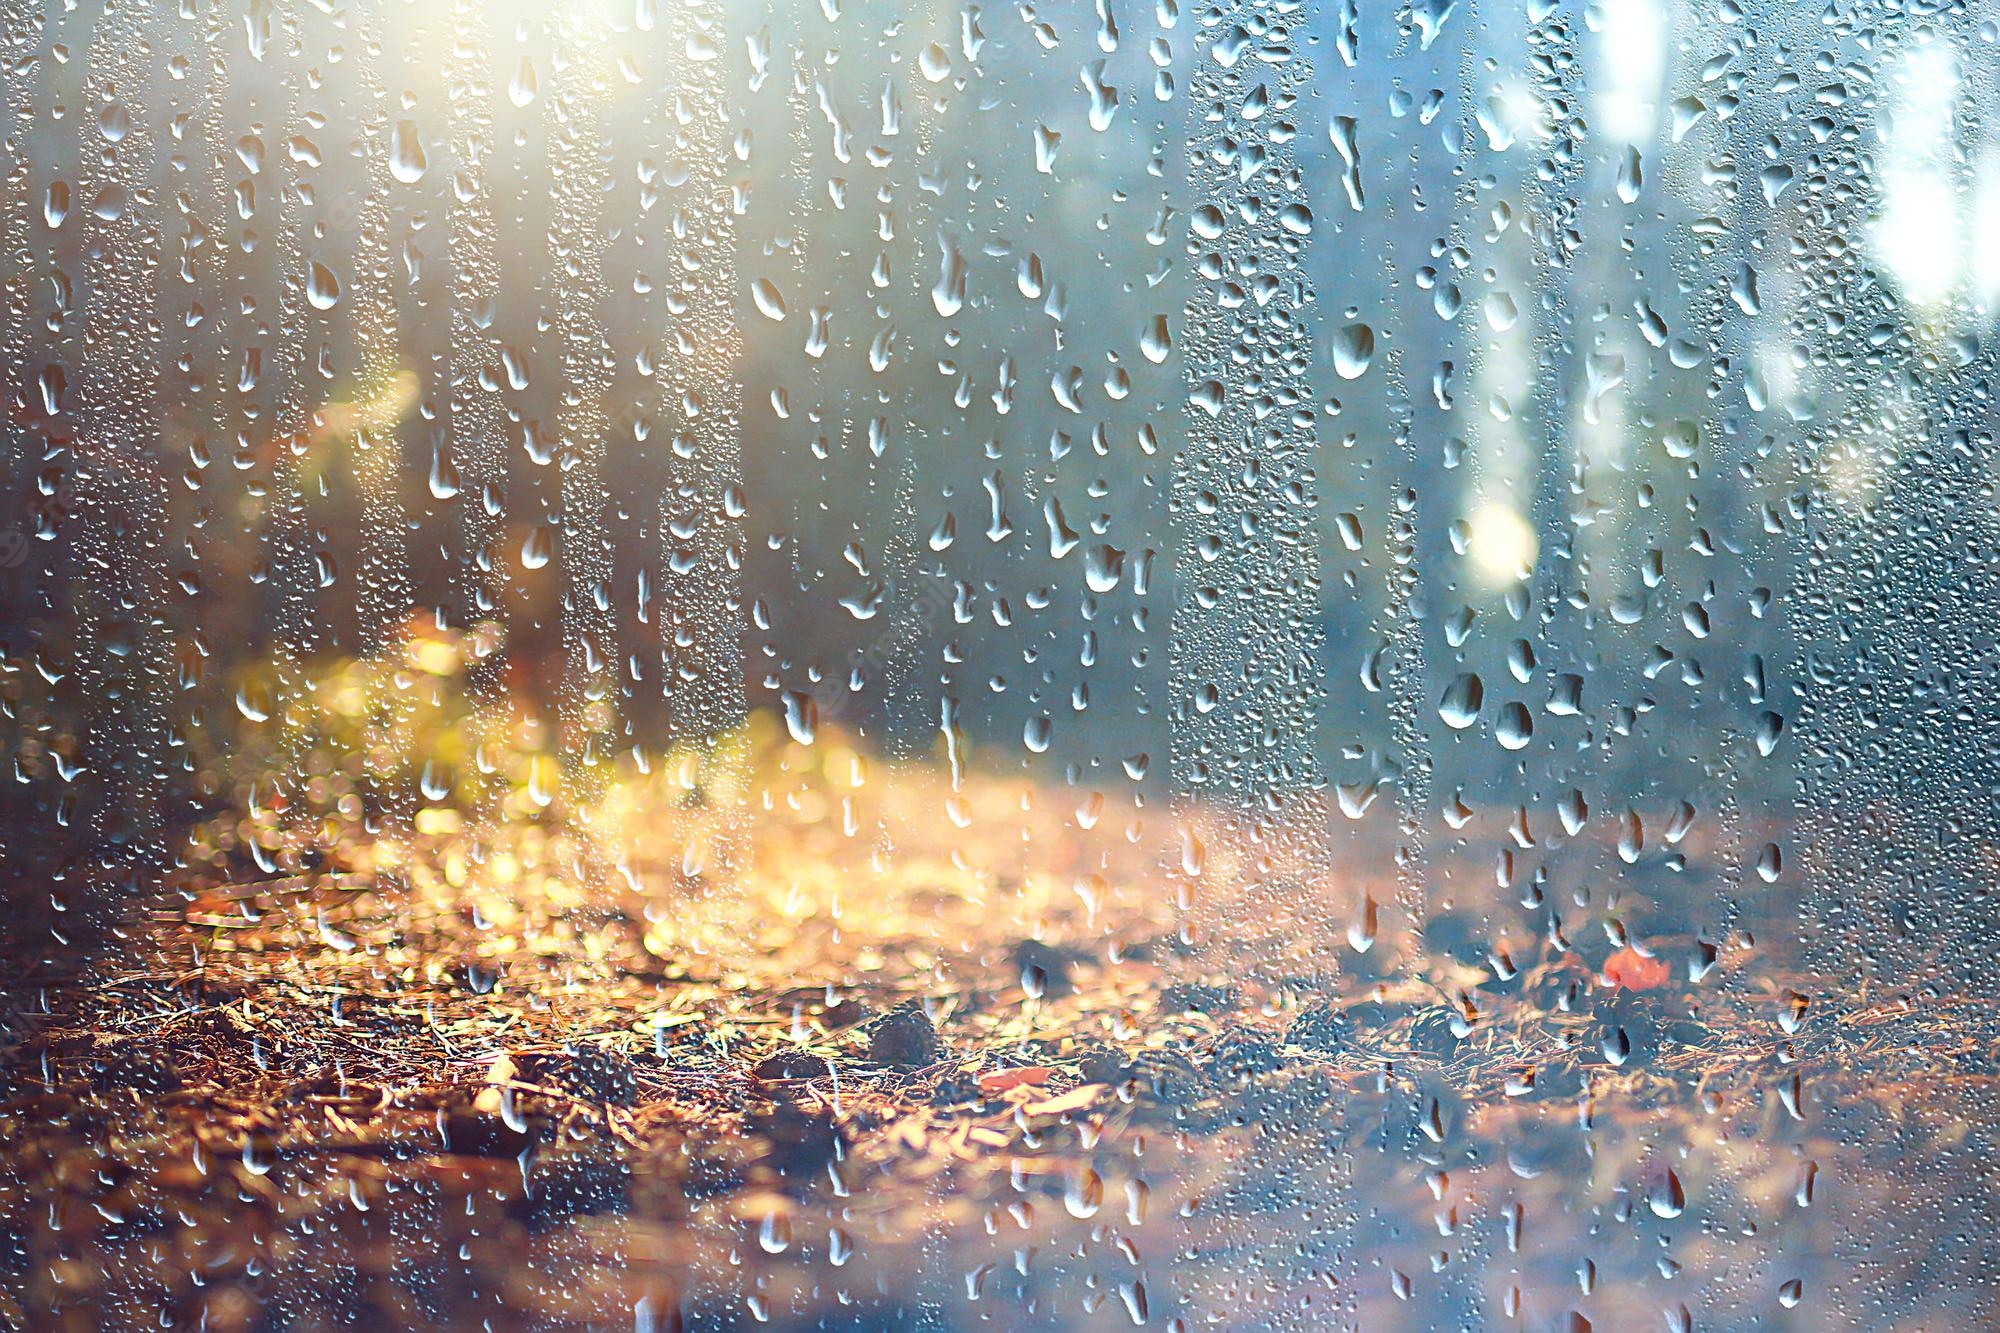 Premium Photo. Landscape autumn rain drops splashes in the forest background, october weather landscape beautiful park